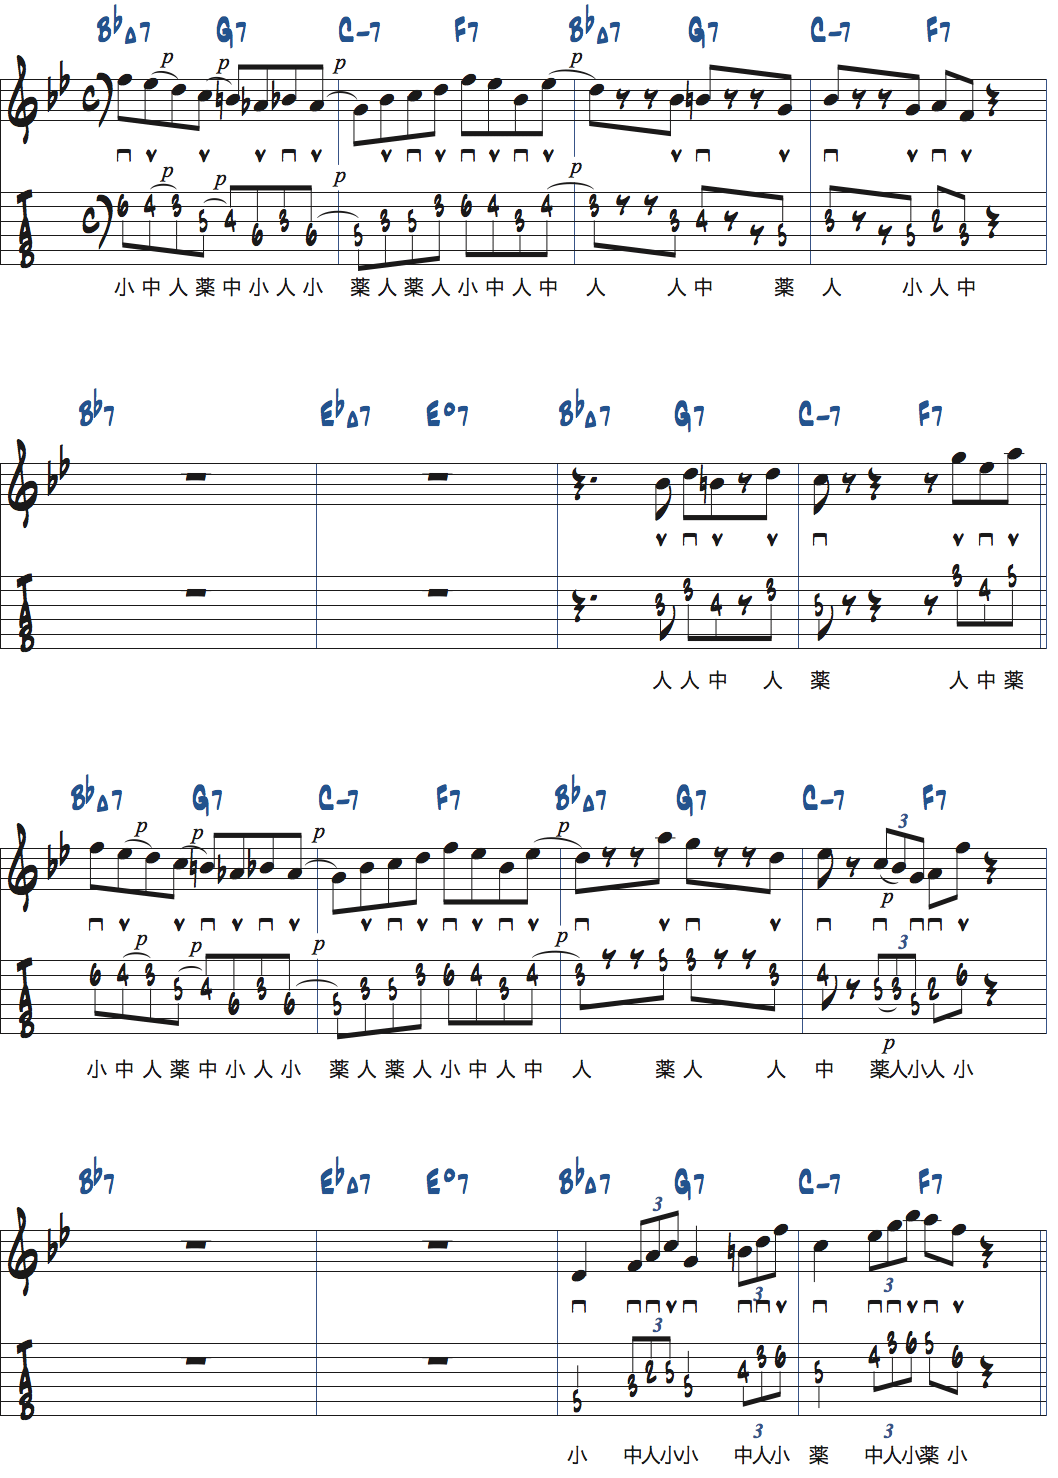 BbメジャーI-VI-II-Vポジション３リック４の前後のコードトーンのリズムを変えて弾く練習楽譜